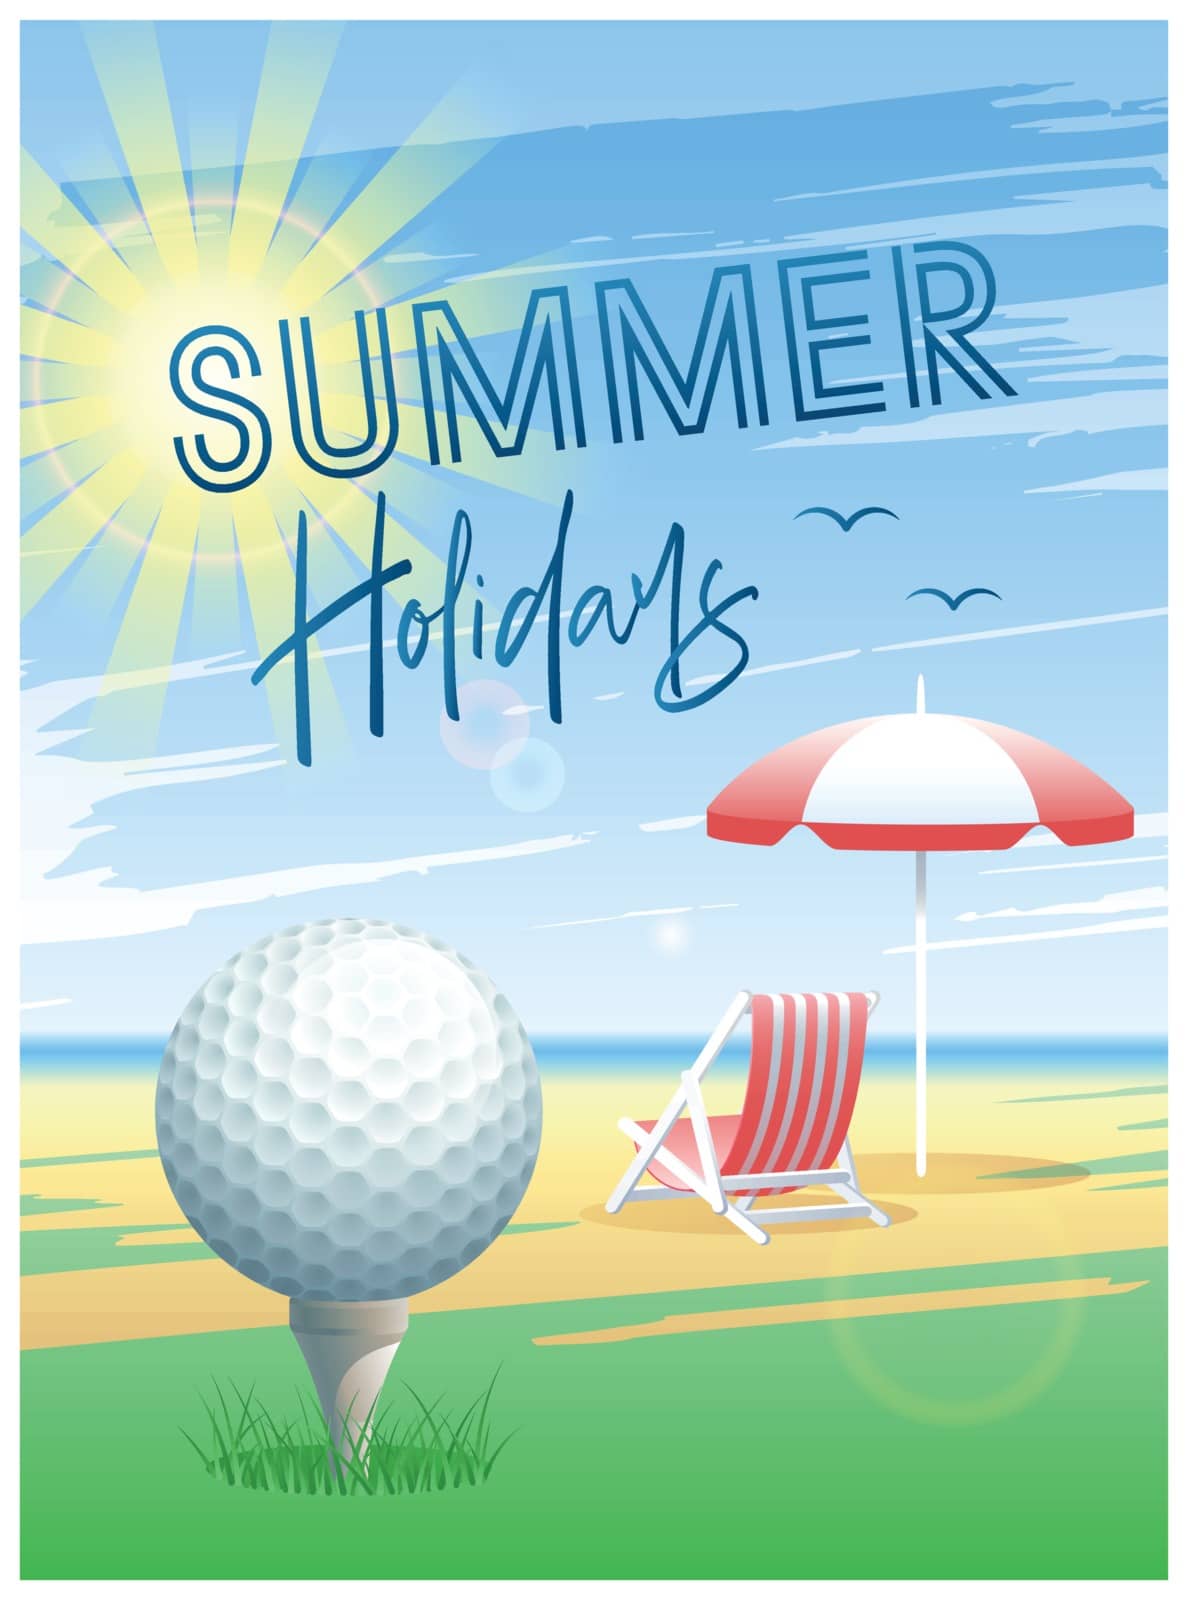 Summer Holidays. Summer Sports card. Golf. by Natariis